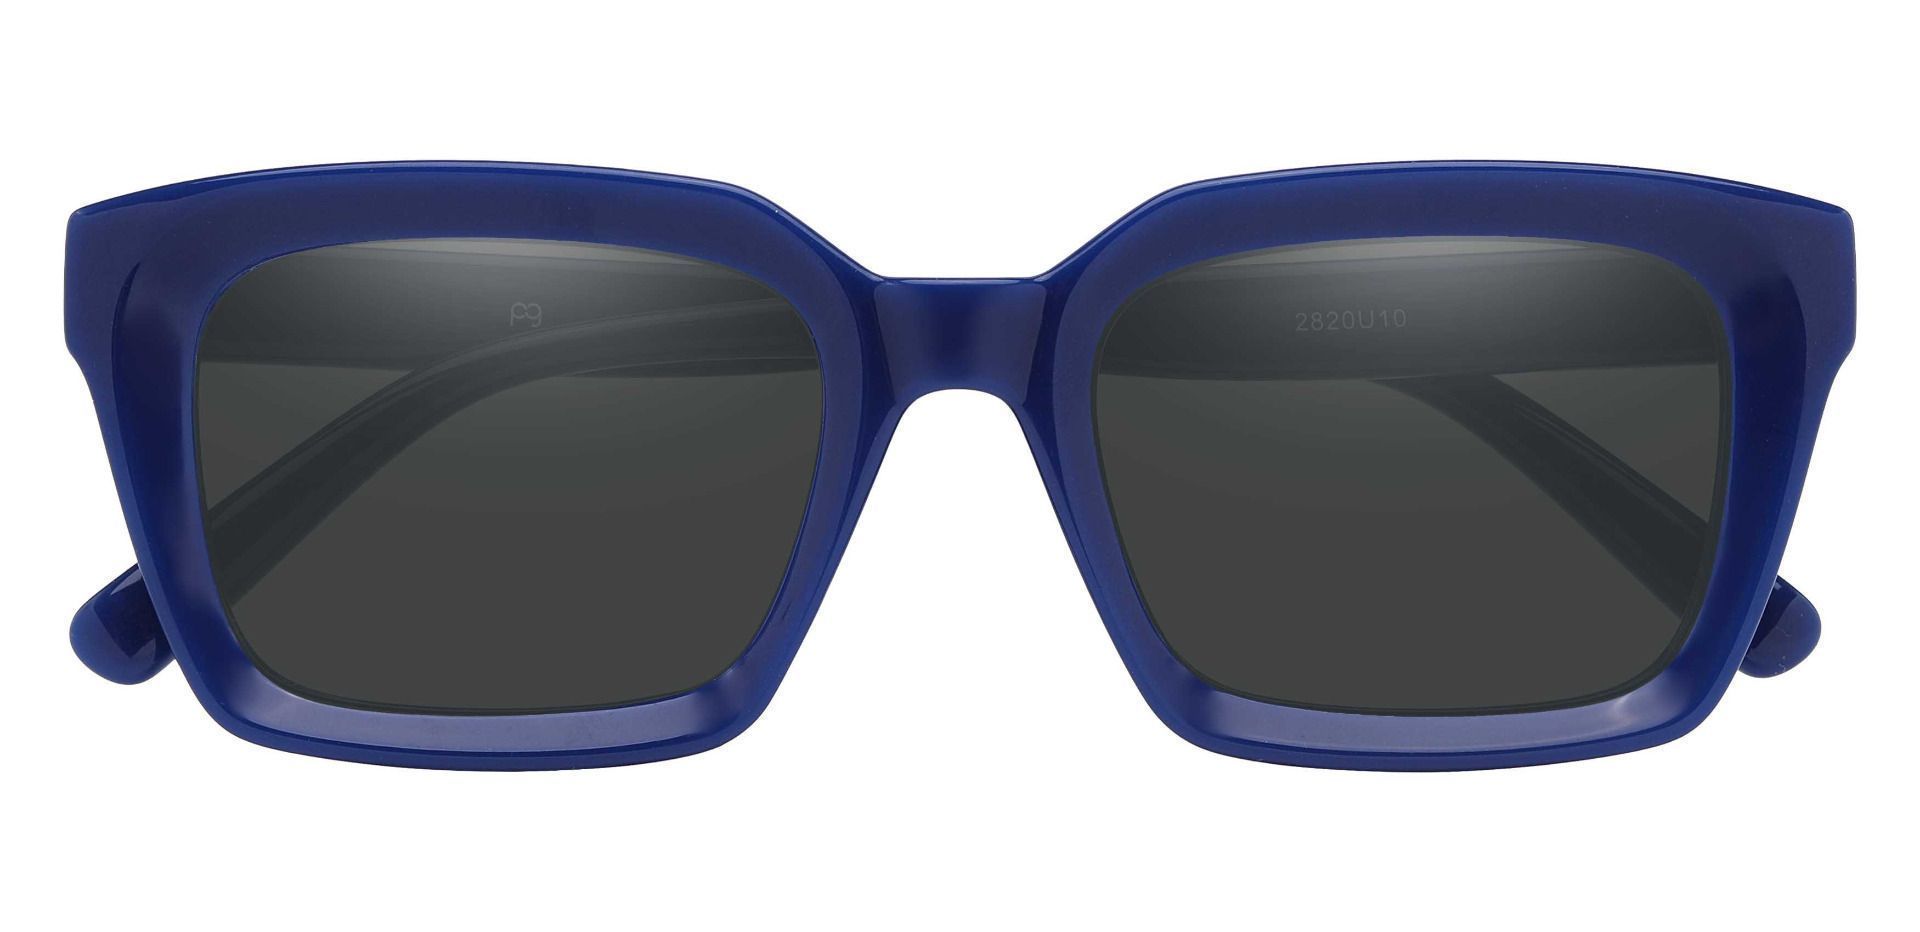 Unity Rectangle Progressive Sunglasses - Blue Frame With Gray Lenses